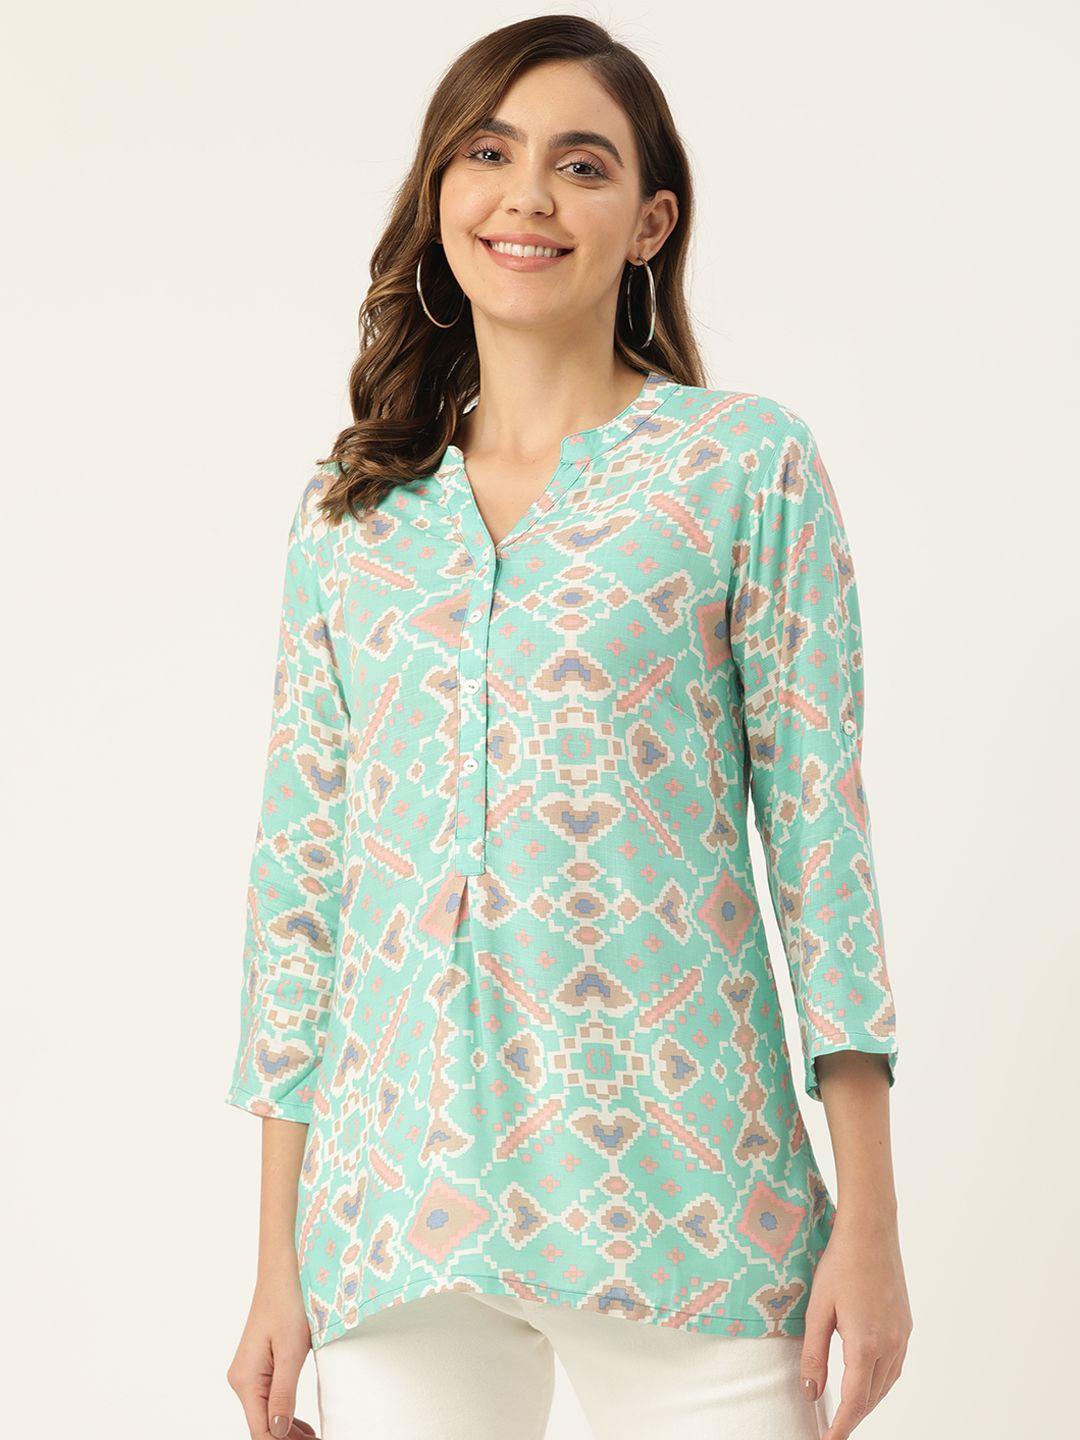 zizo by namrata bajaj blue & peach-coloured printed shirt style top